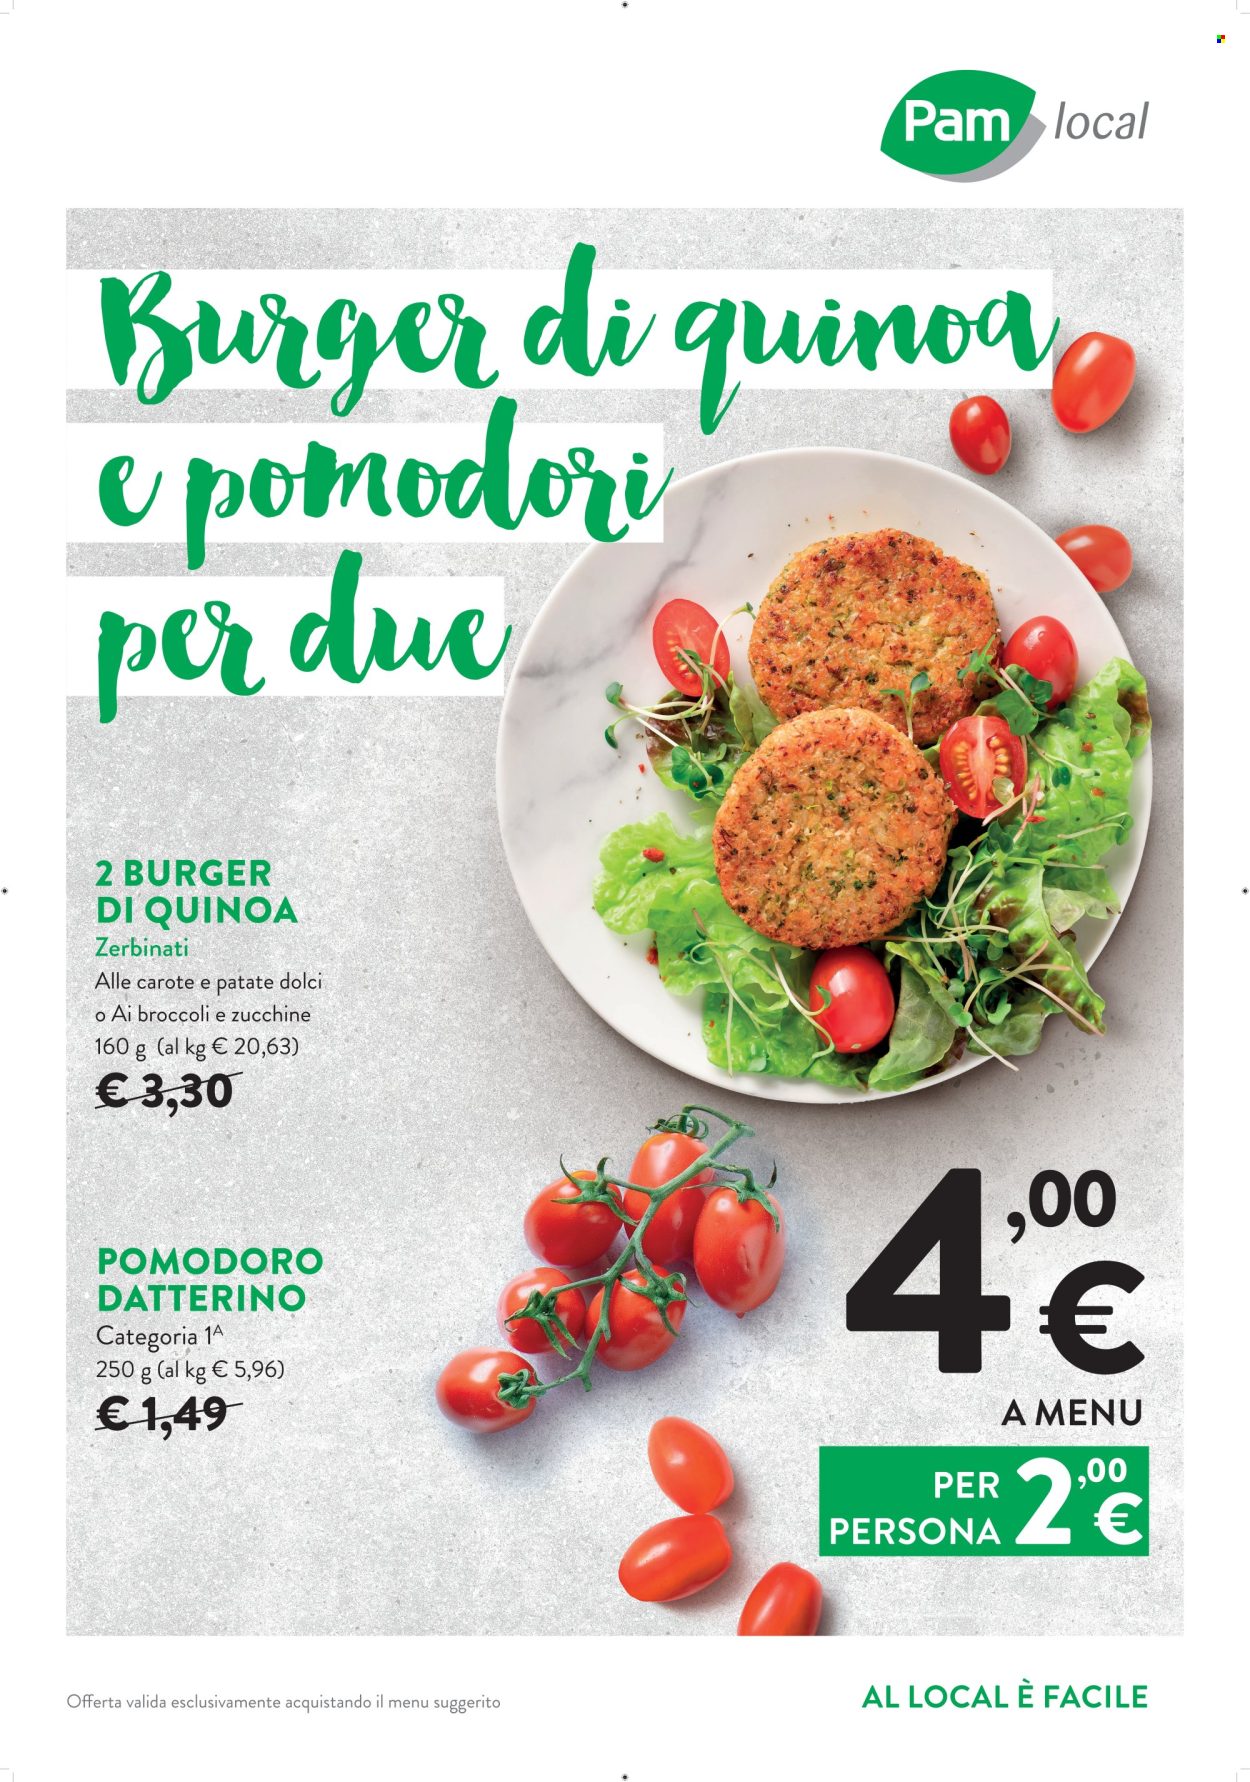 thumbnail - Volantino Pam local - Prodotti in offerta - patate dolci, zucchine, pomodorini, hamburger. Pagina 1.